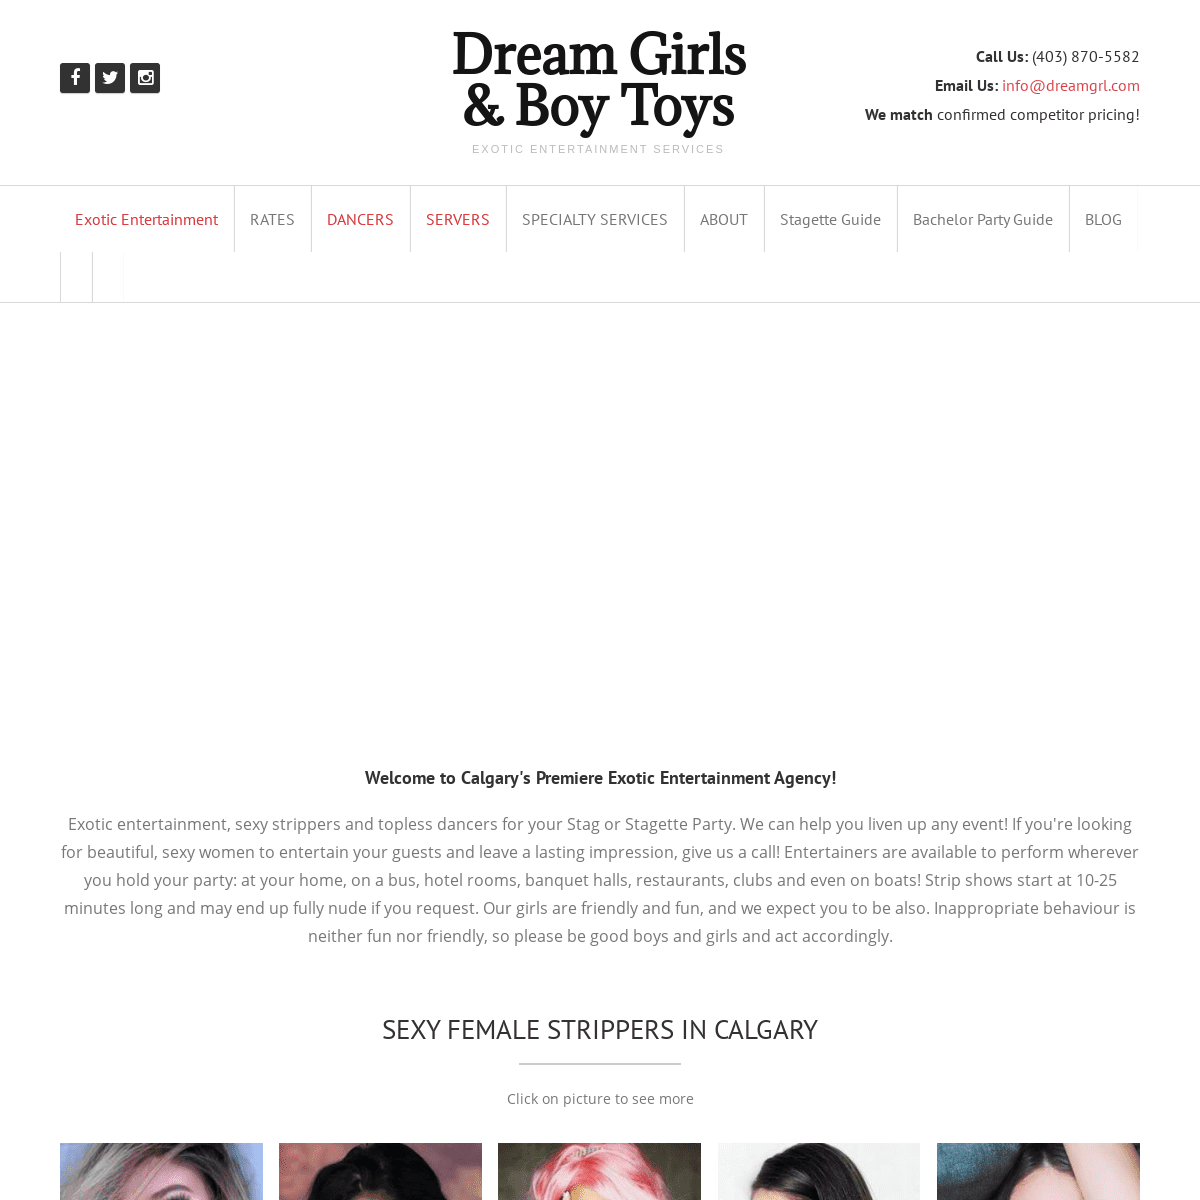 A complete backup of dreamgrl.com